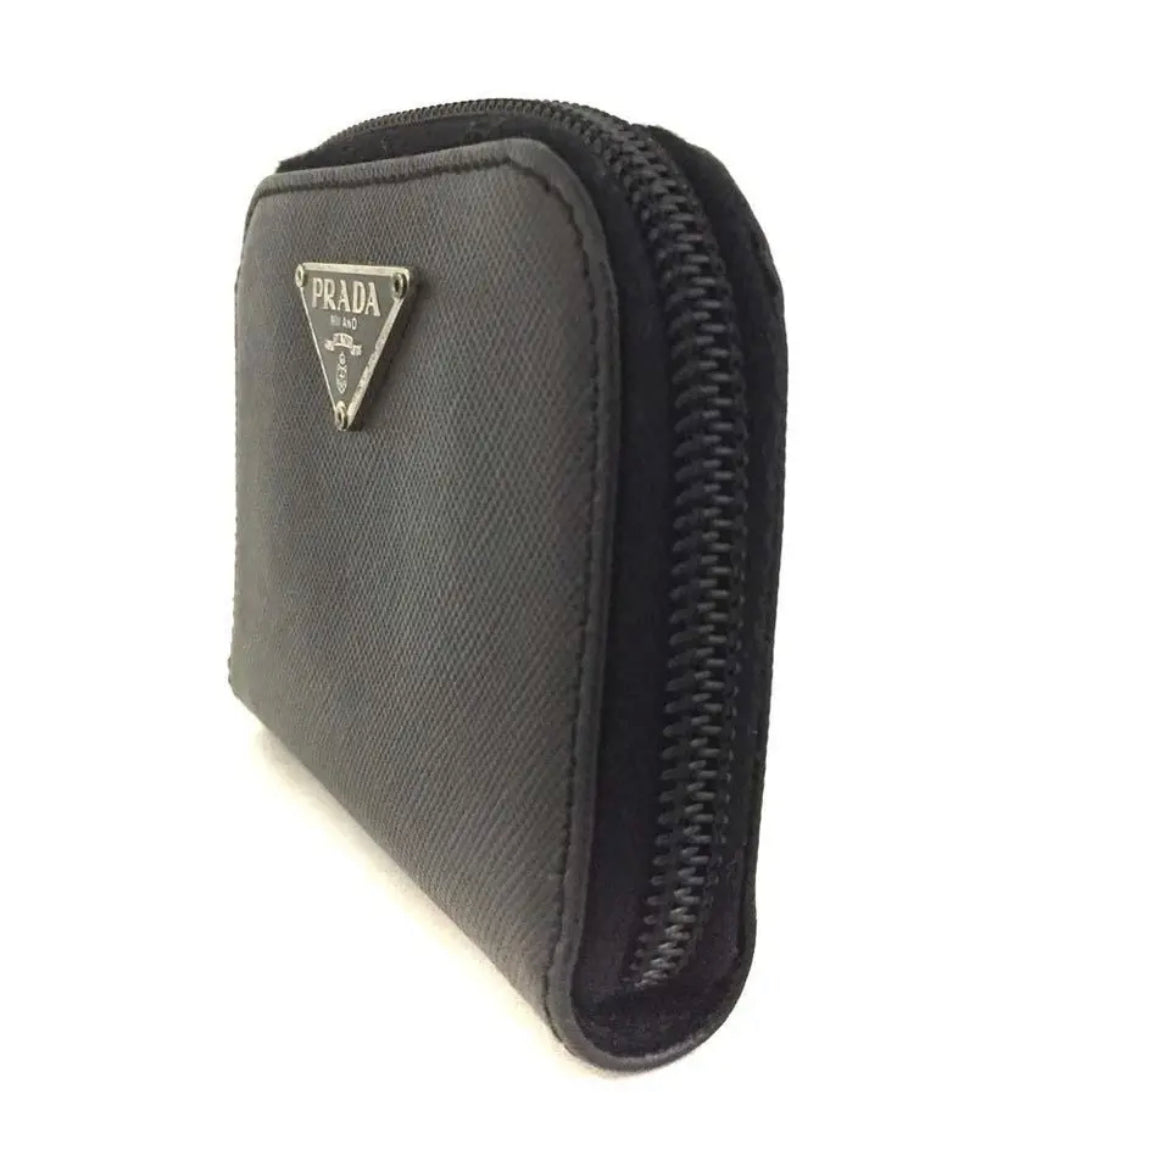 PRADA Saffiano Leather Zip Around Coin Purse